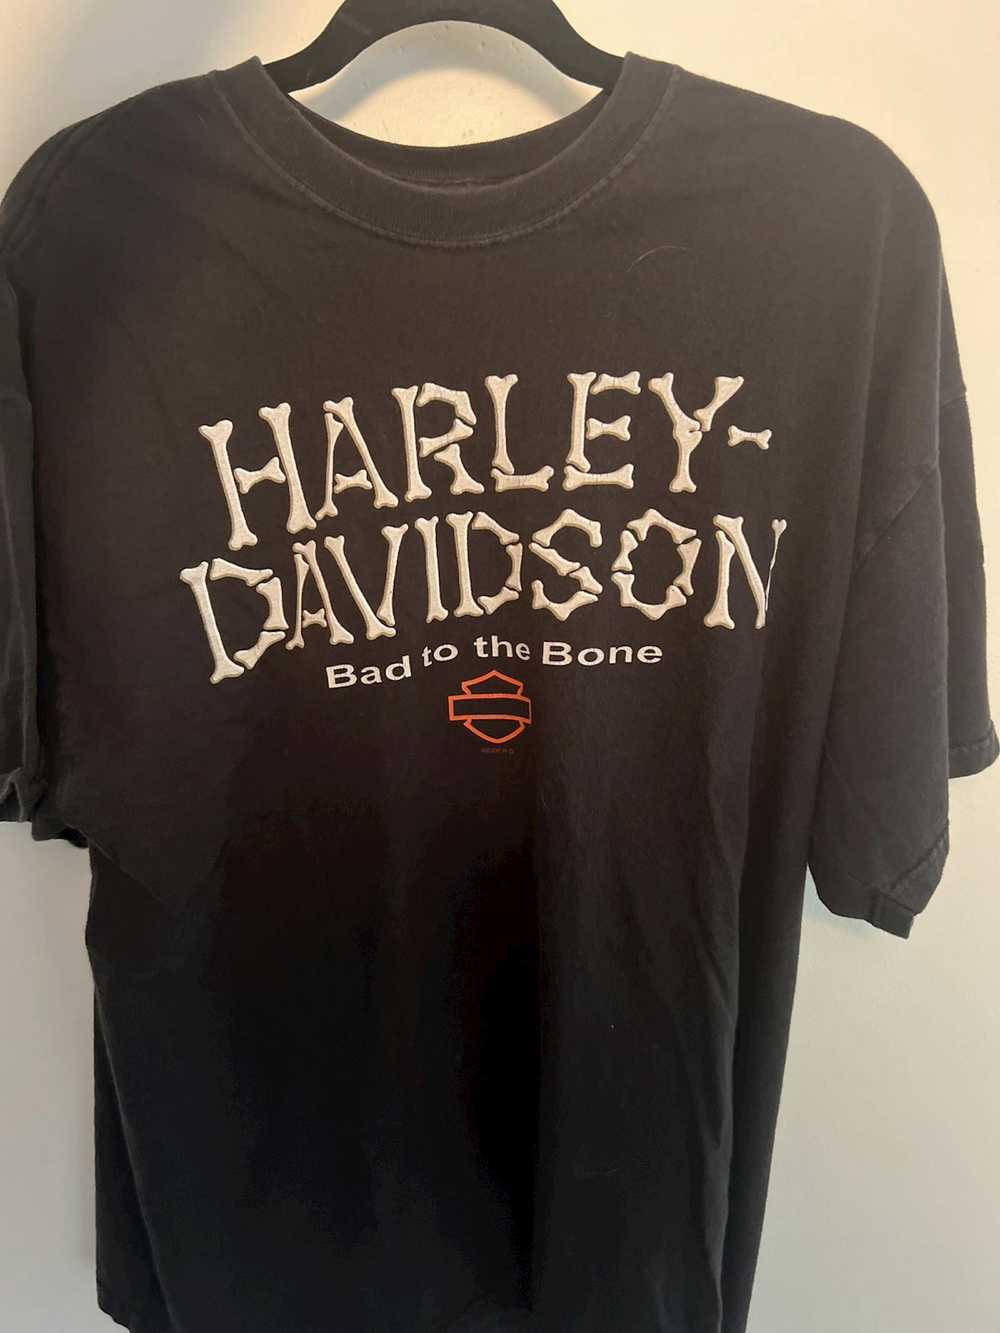 Harley Davidson Harley t shirts - image 2